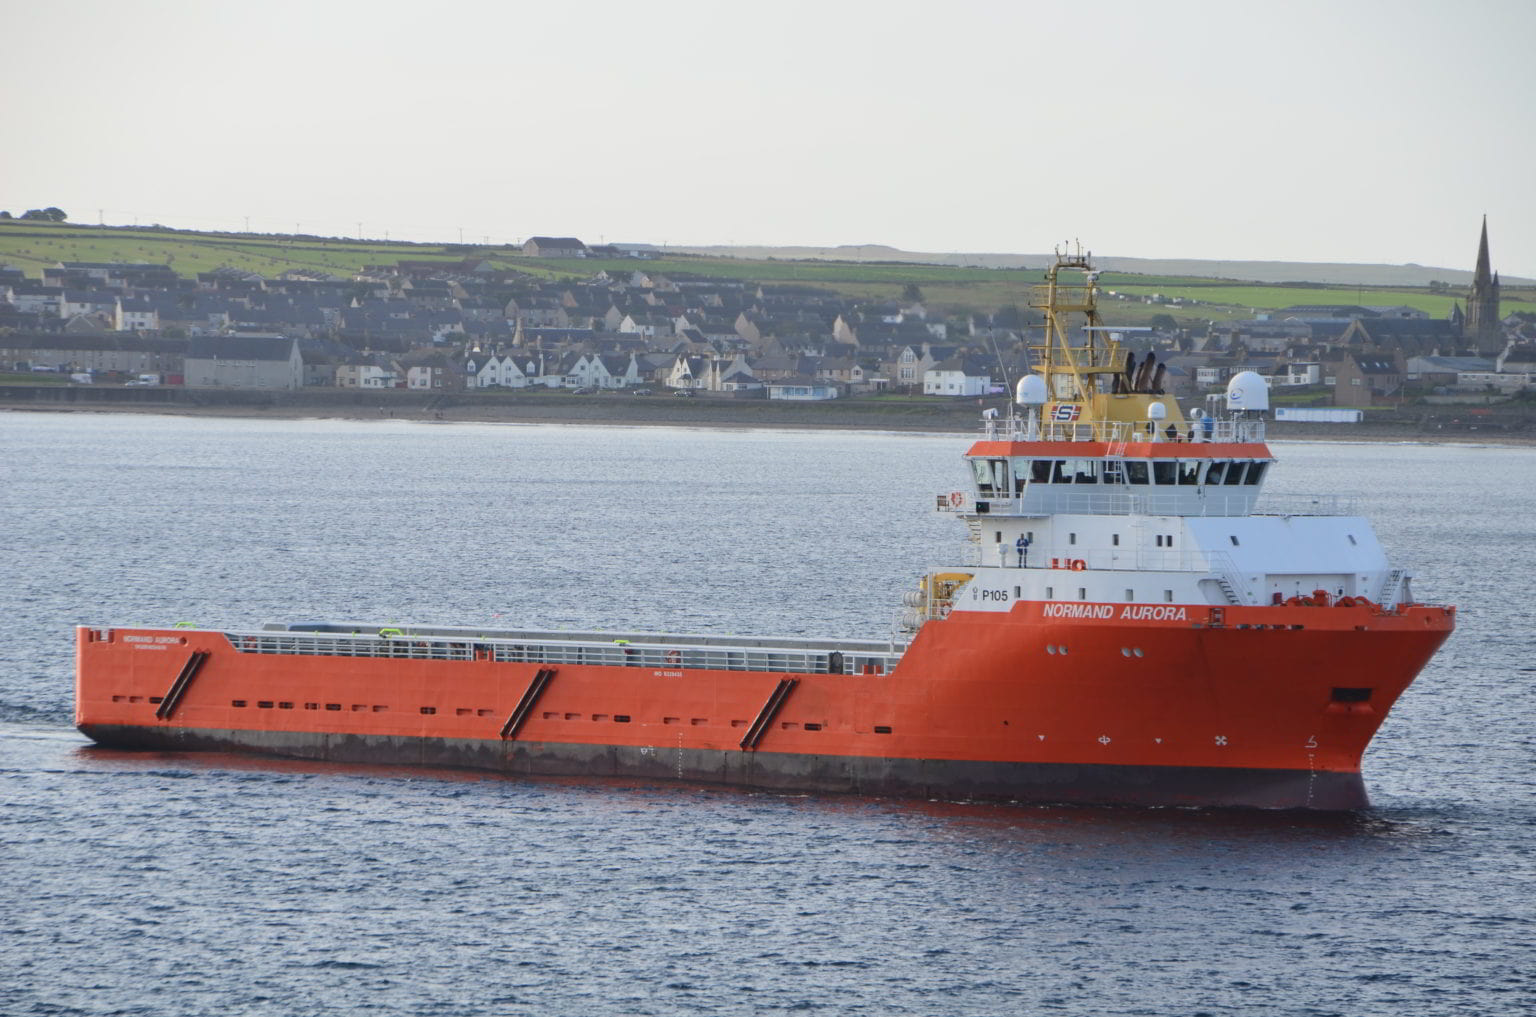 Solstad offloads yet another vessel